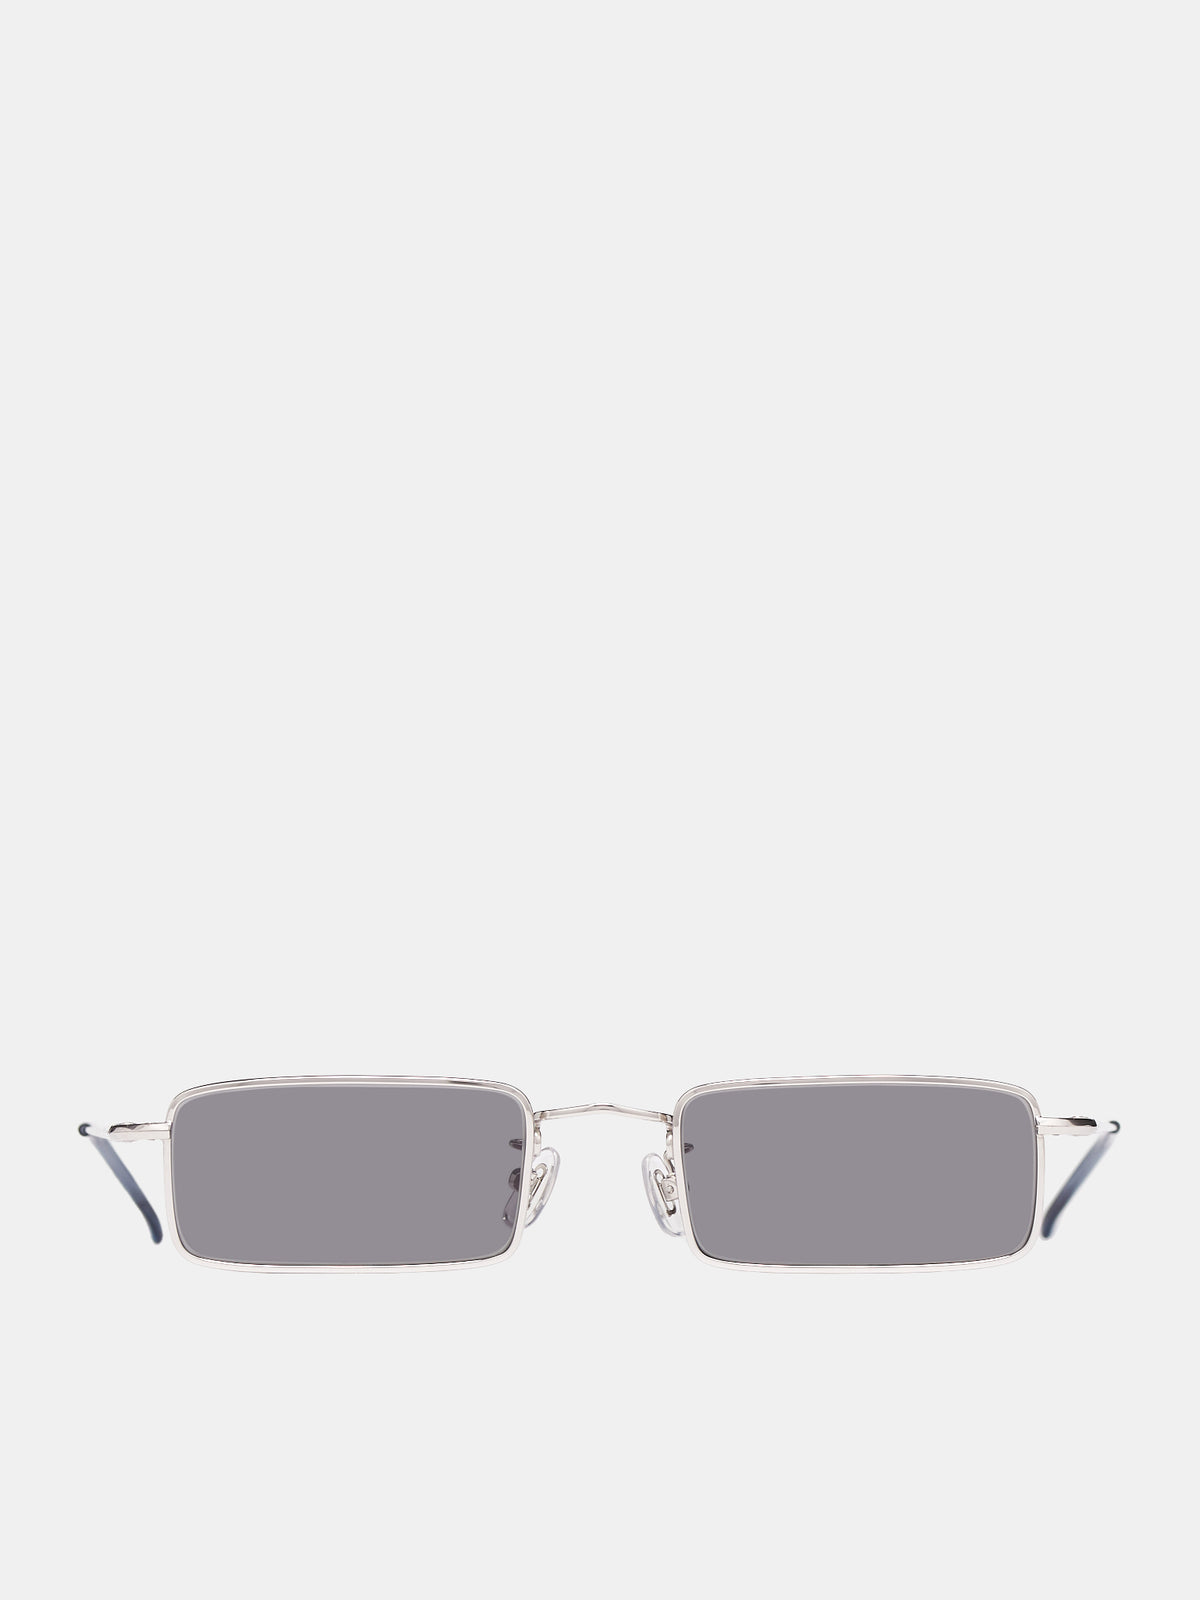 ST Titan Brighton Sunglasses(ST-TITAN-BRIGHTON-SILVER-FLAT-)